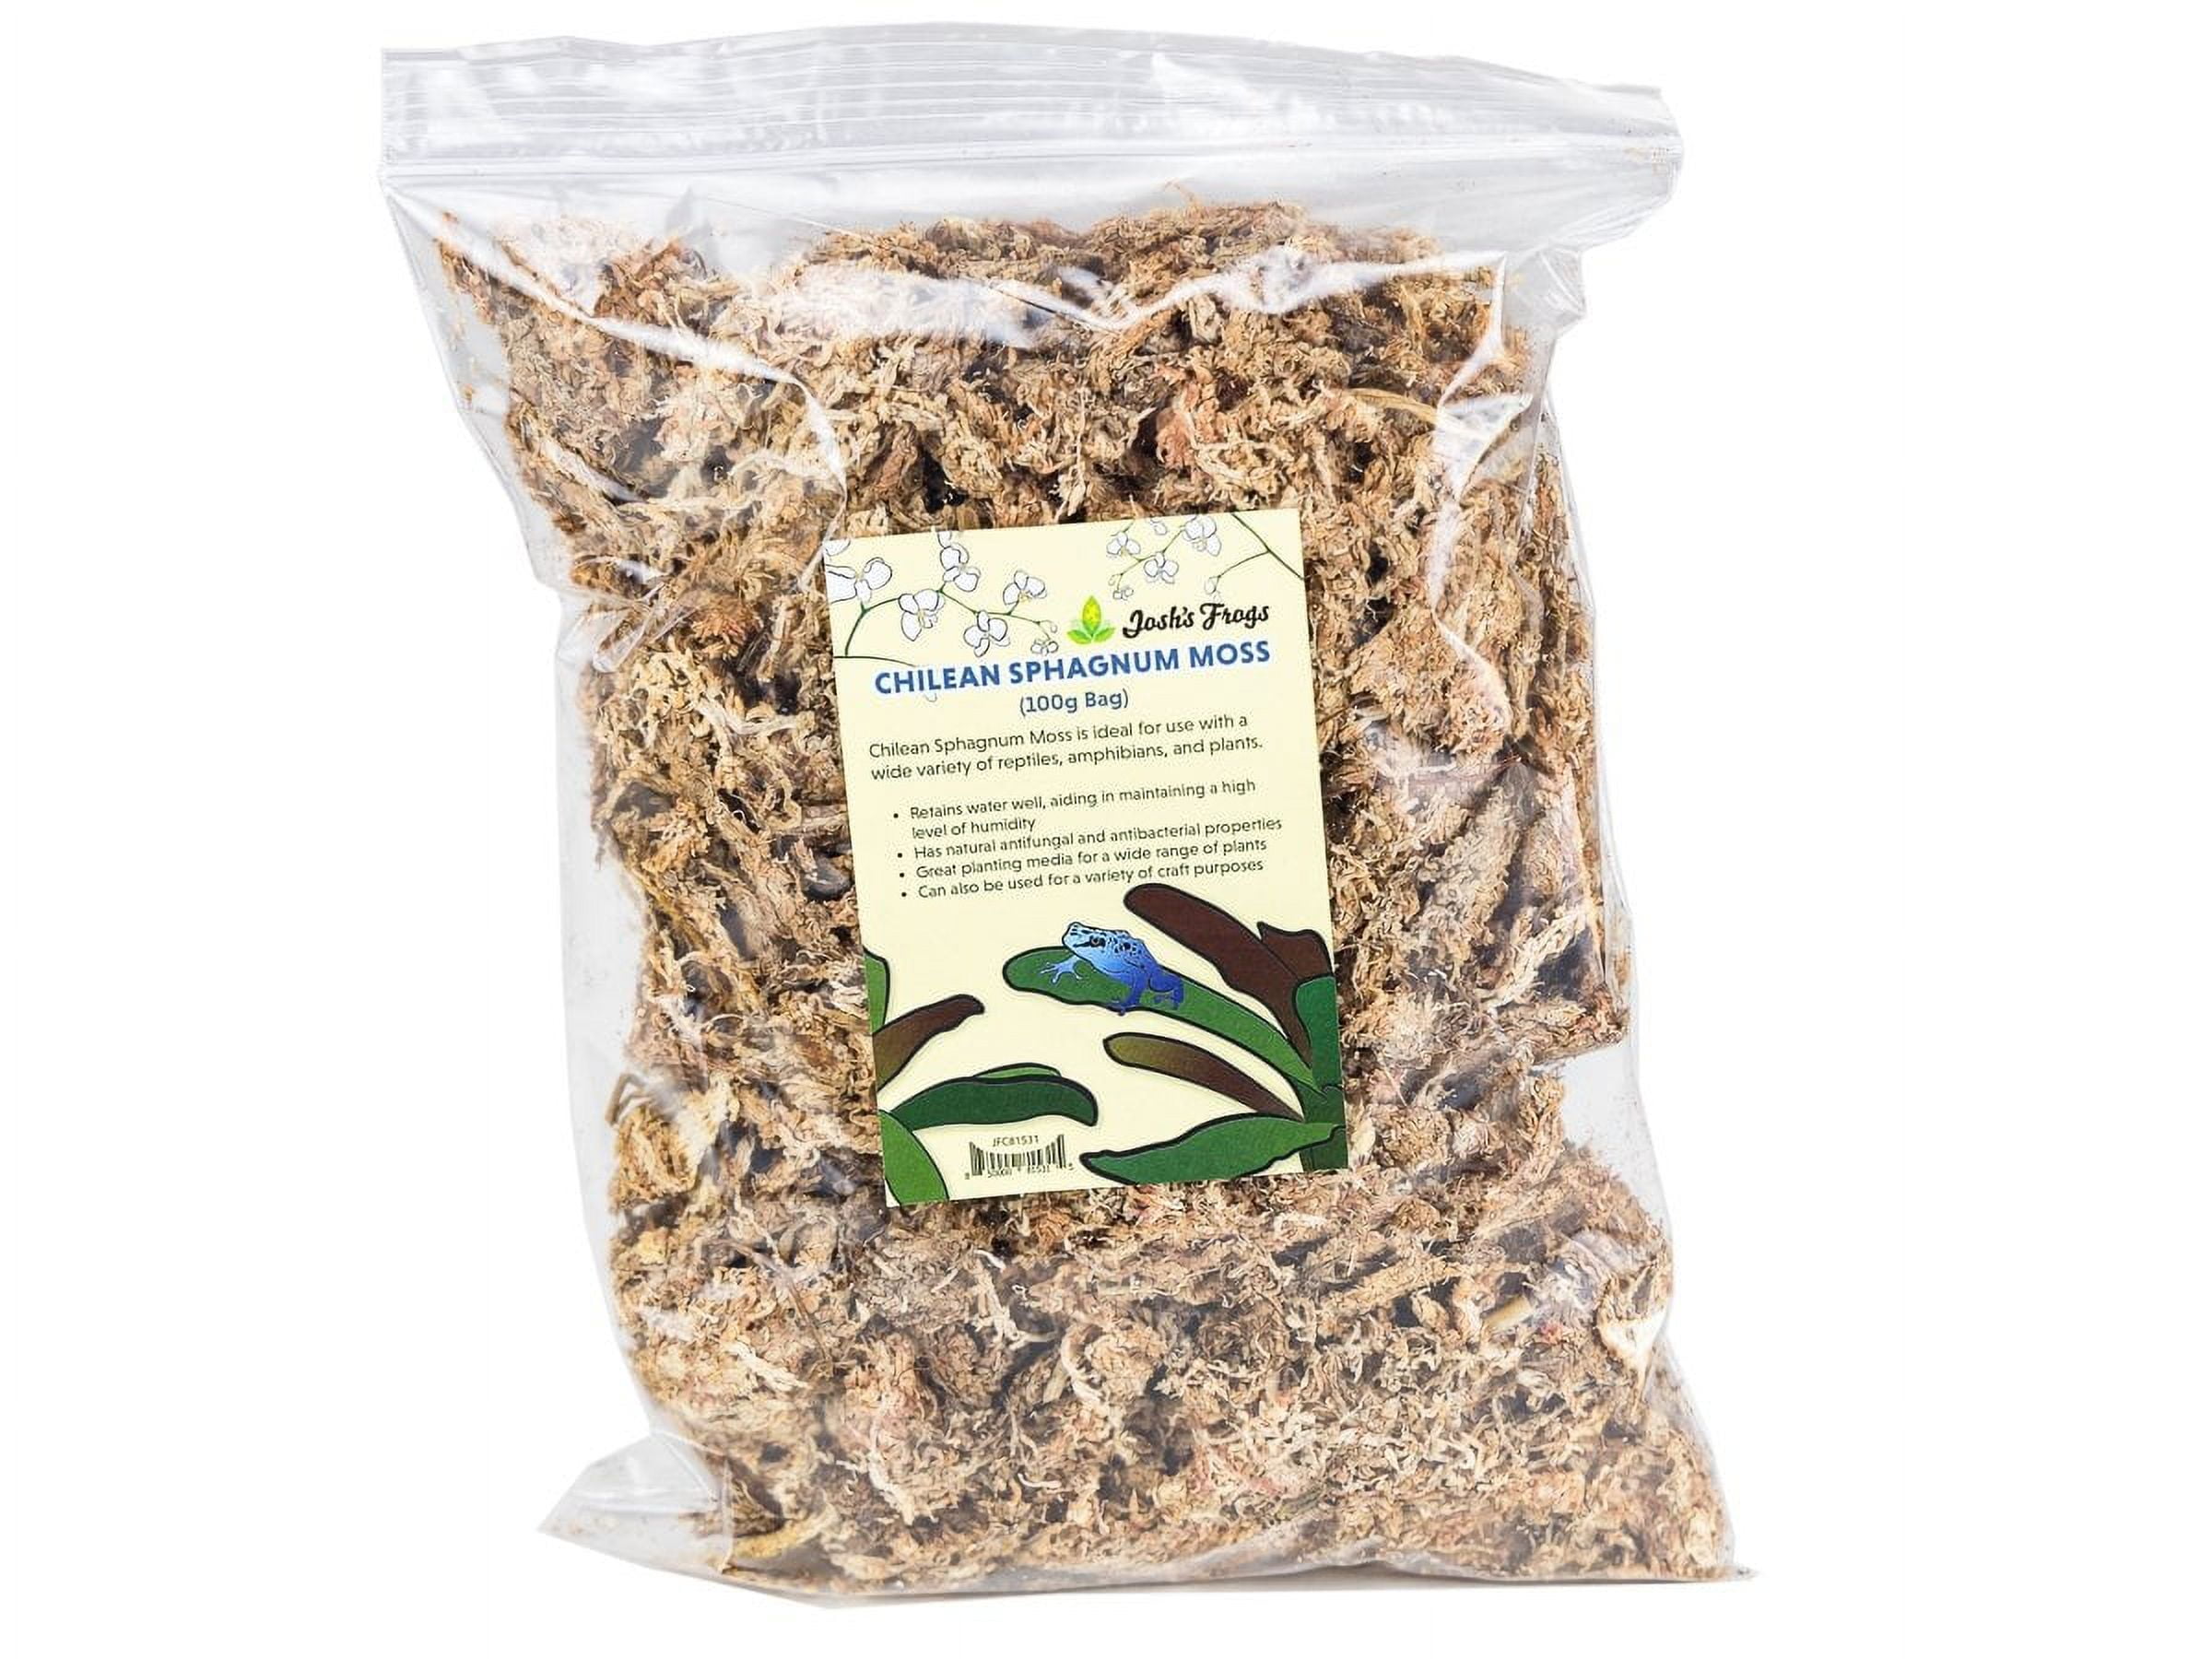 Brunnings Sphagnum Moss 150g – Woonona Petfood & Produce